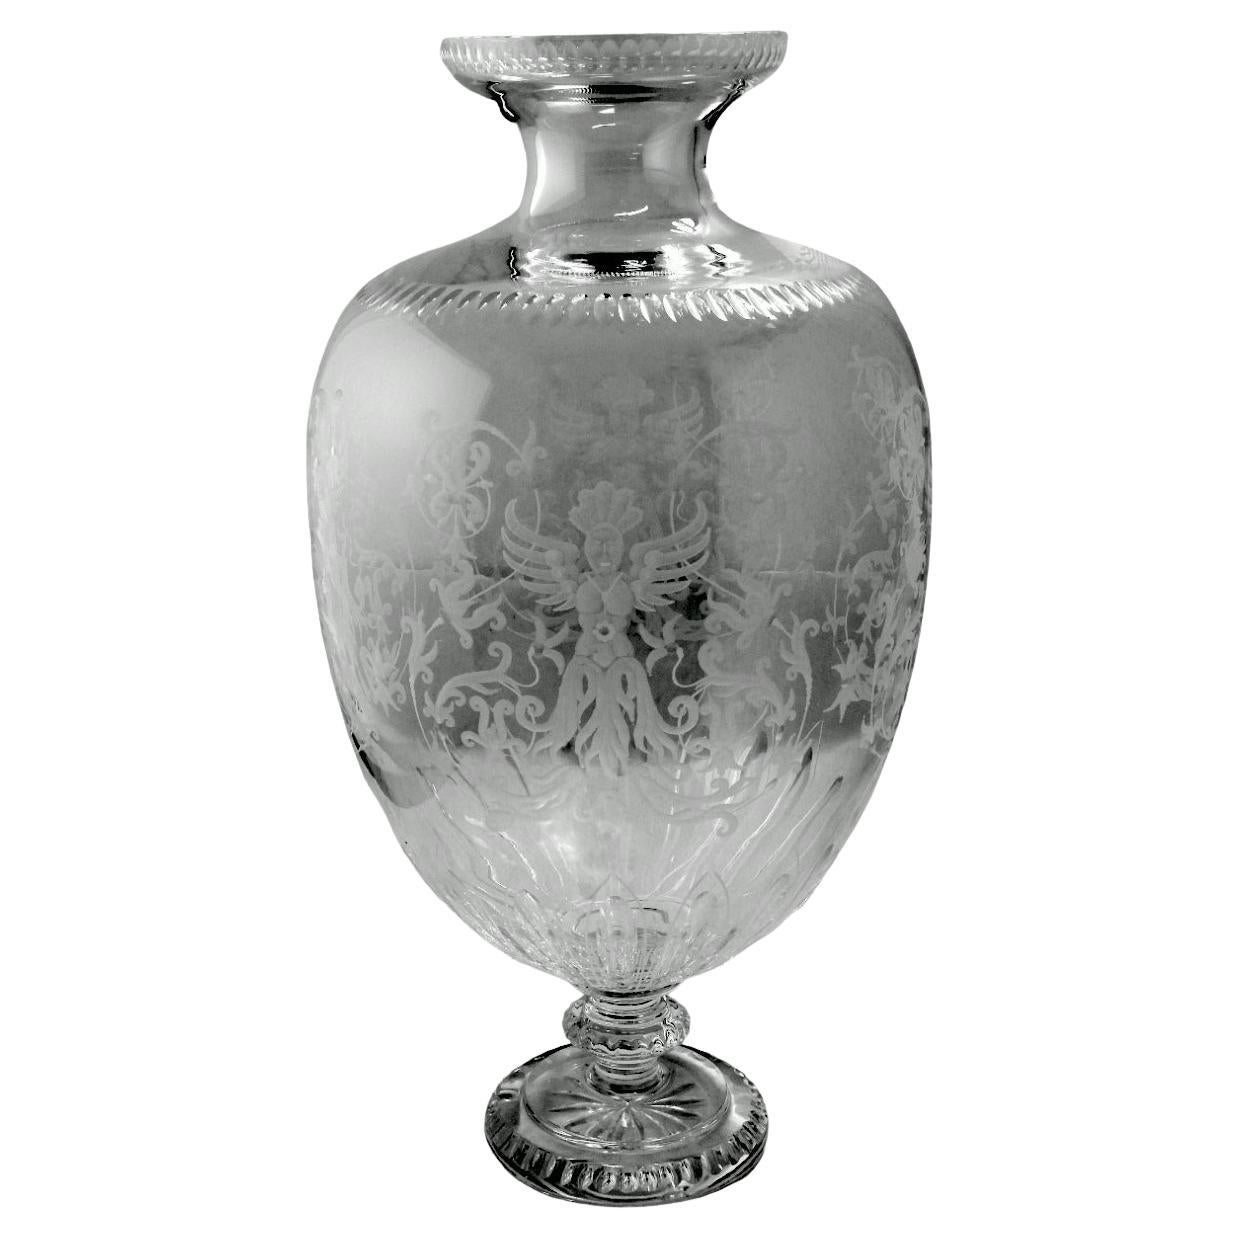 Grand vase italien en cristal de style baroque avec gravures grotesques